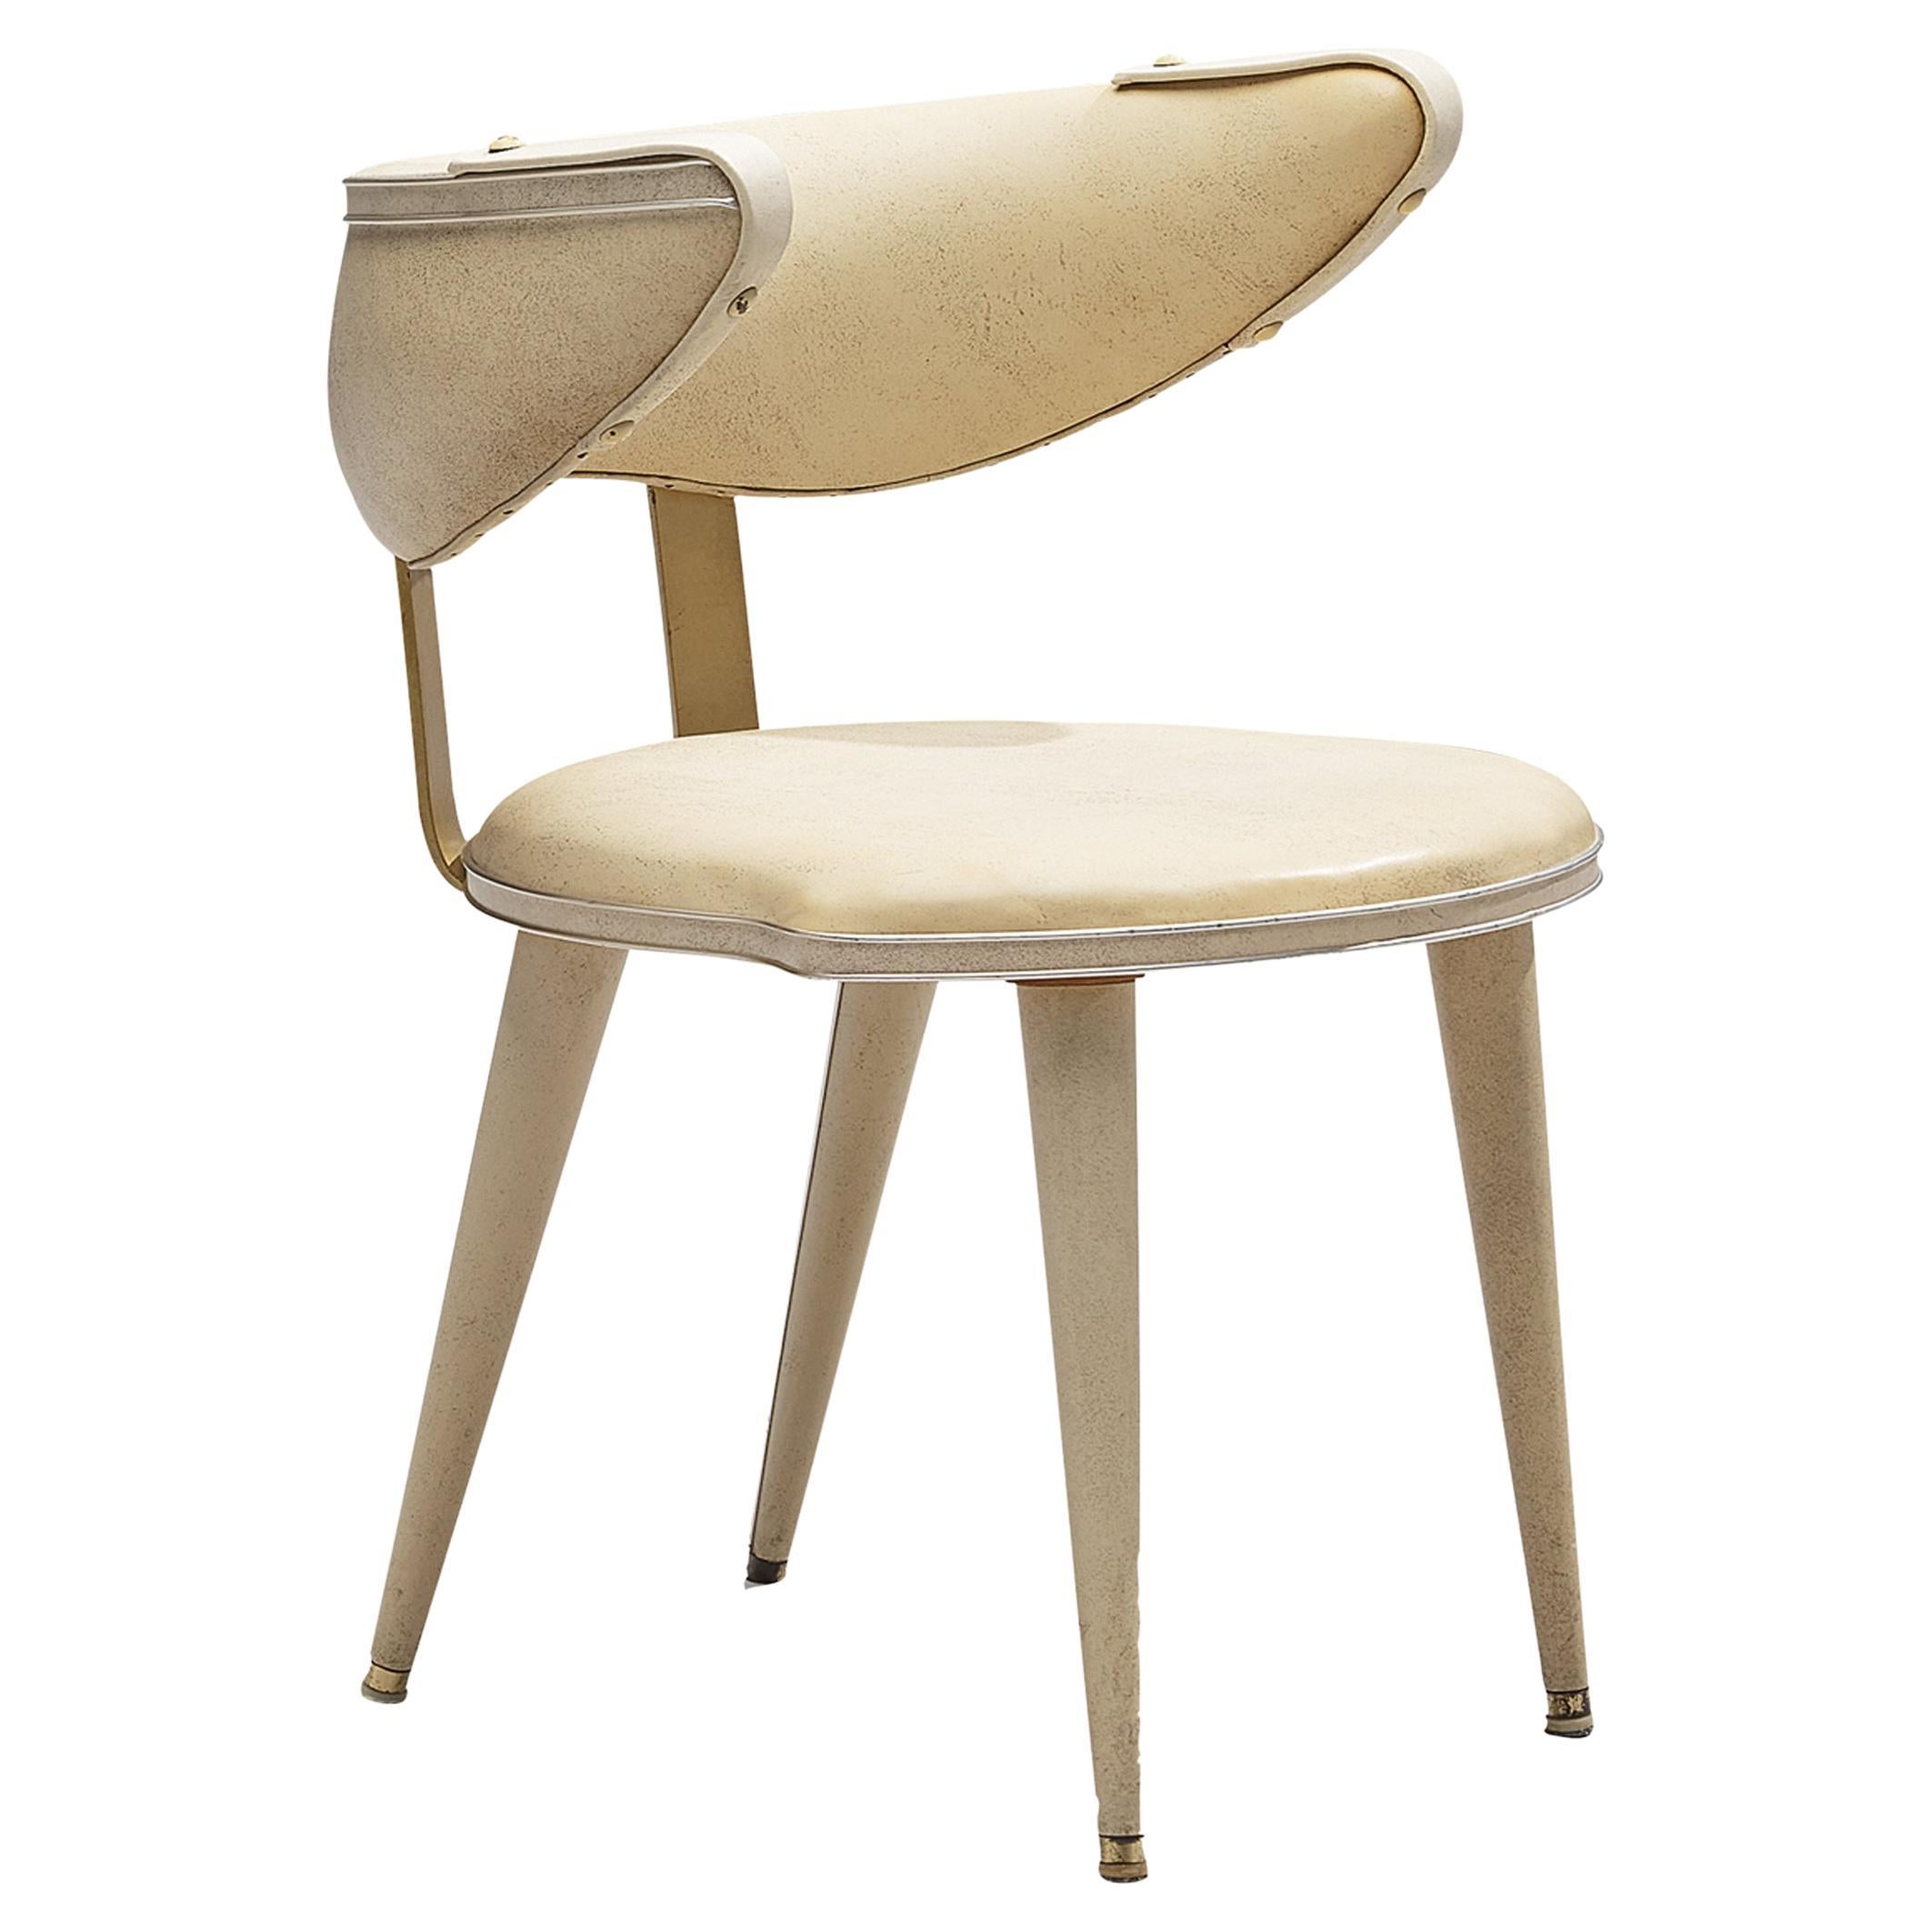 Umberto Mascagni Sculptural Chair